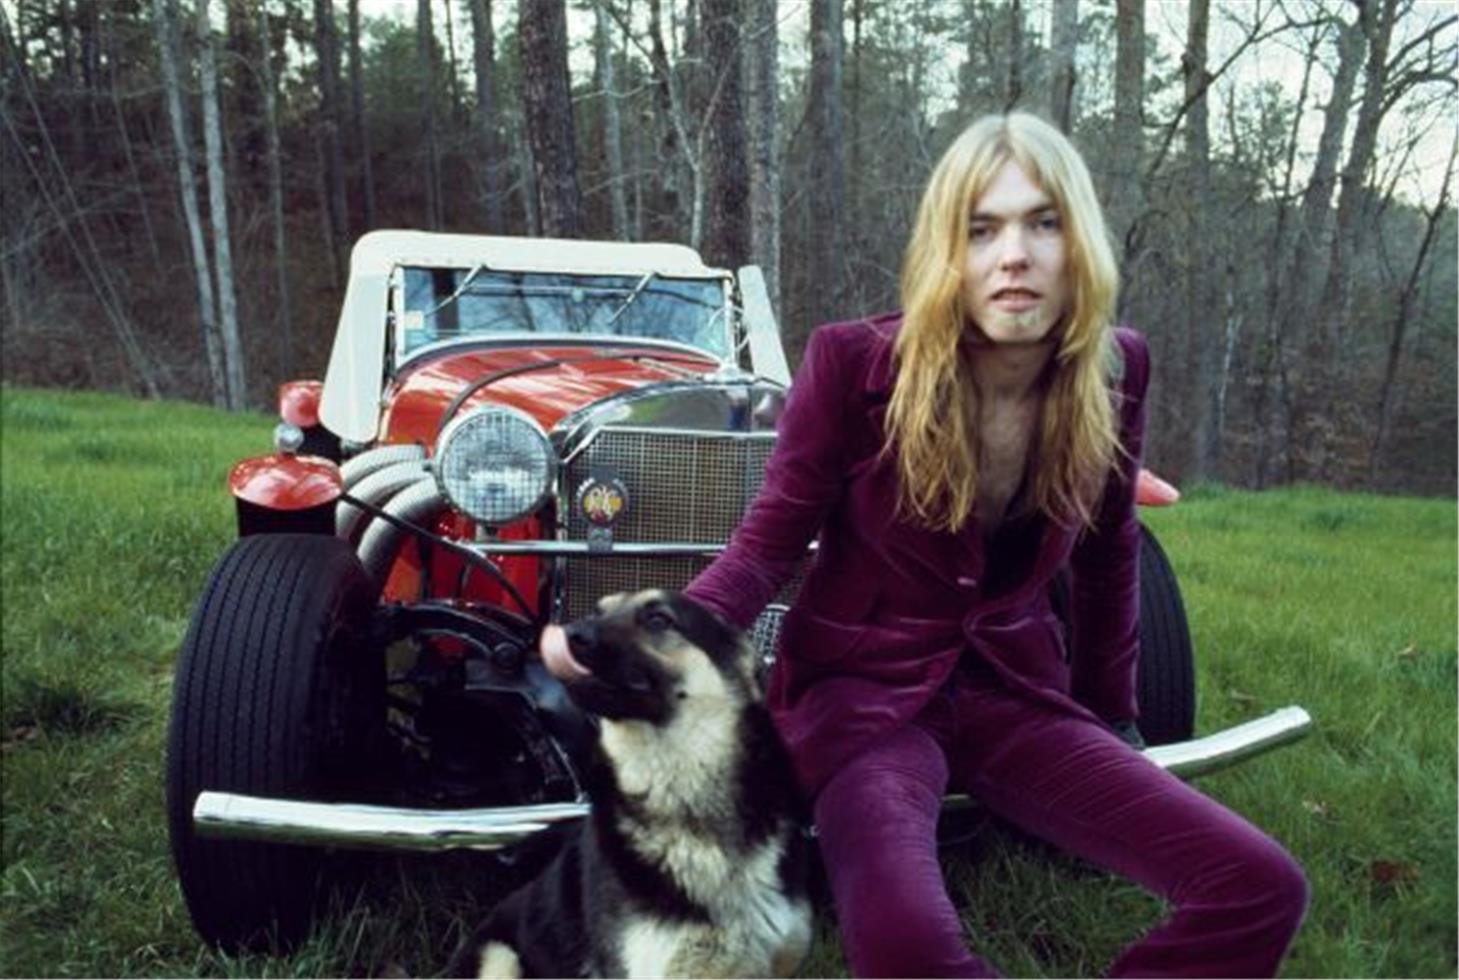 Gilbert Lee Color Photograph - Gregg Allman with his dog, 1975